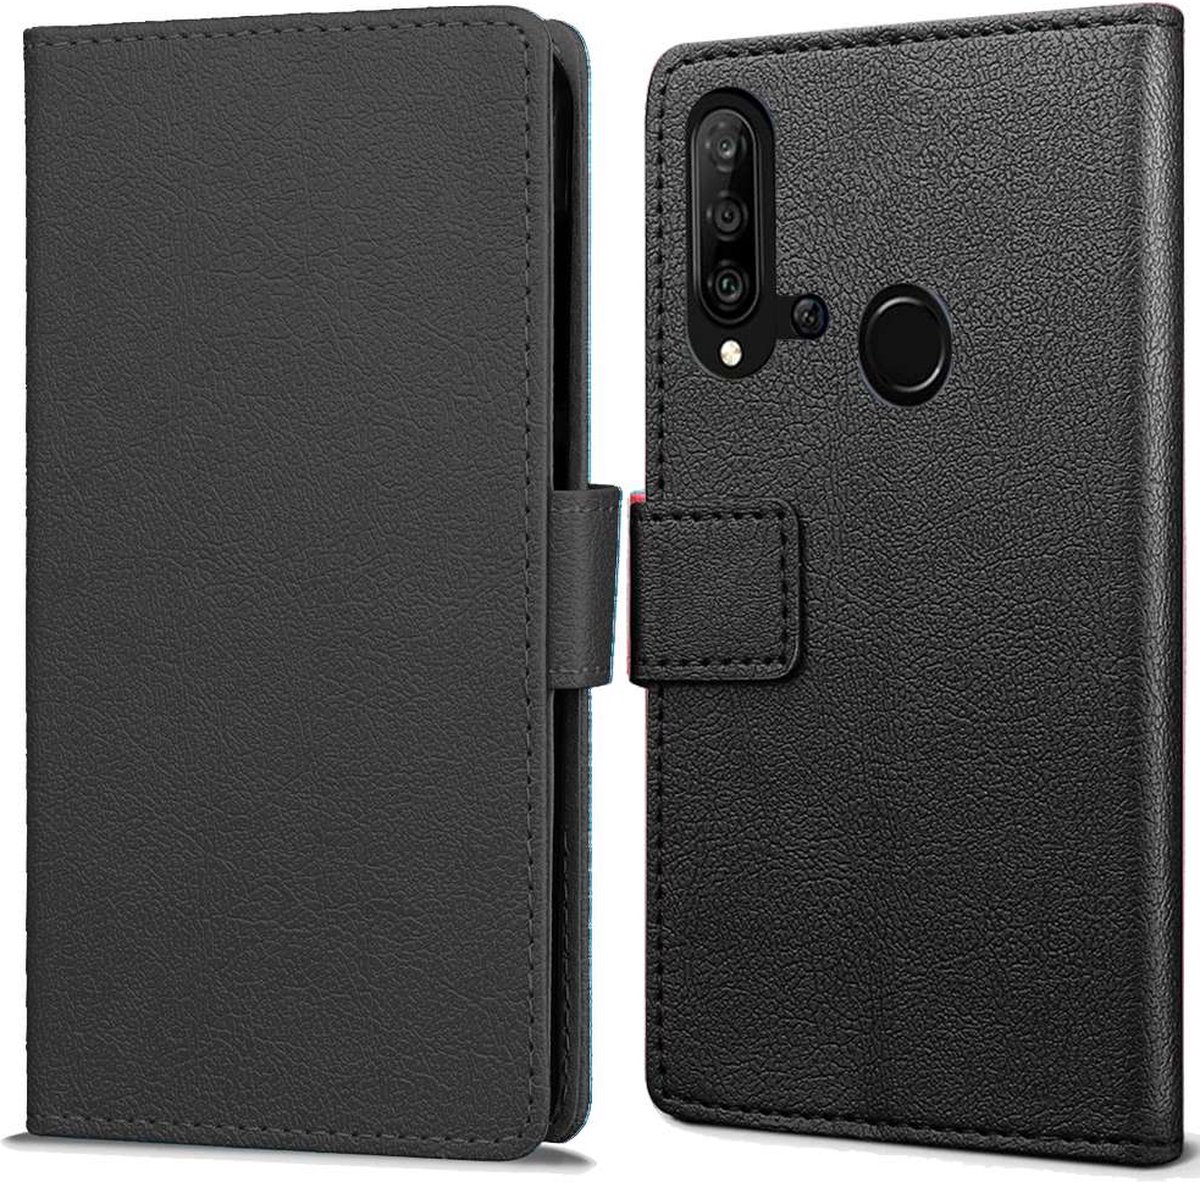 Just in Case Huawei P20 Lite 2019 Wallet Case (Black)